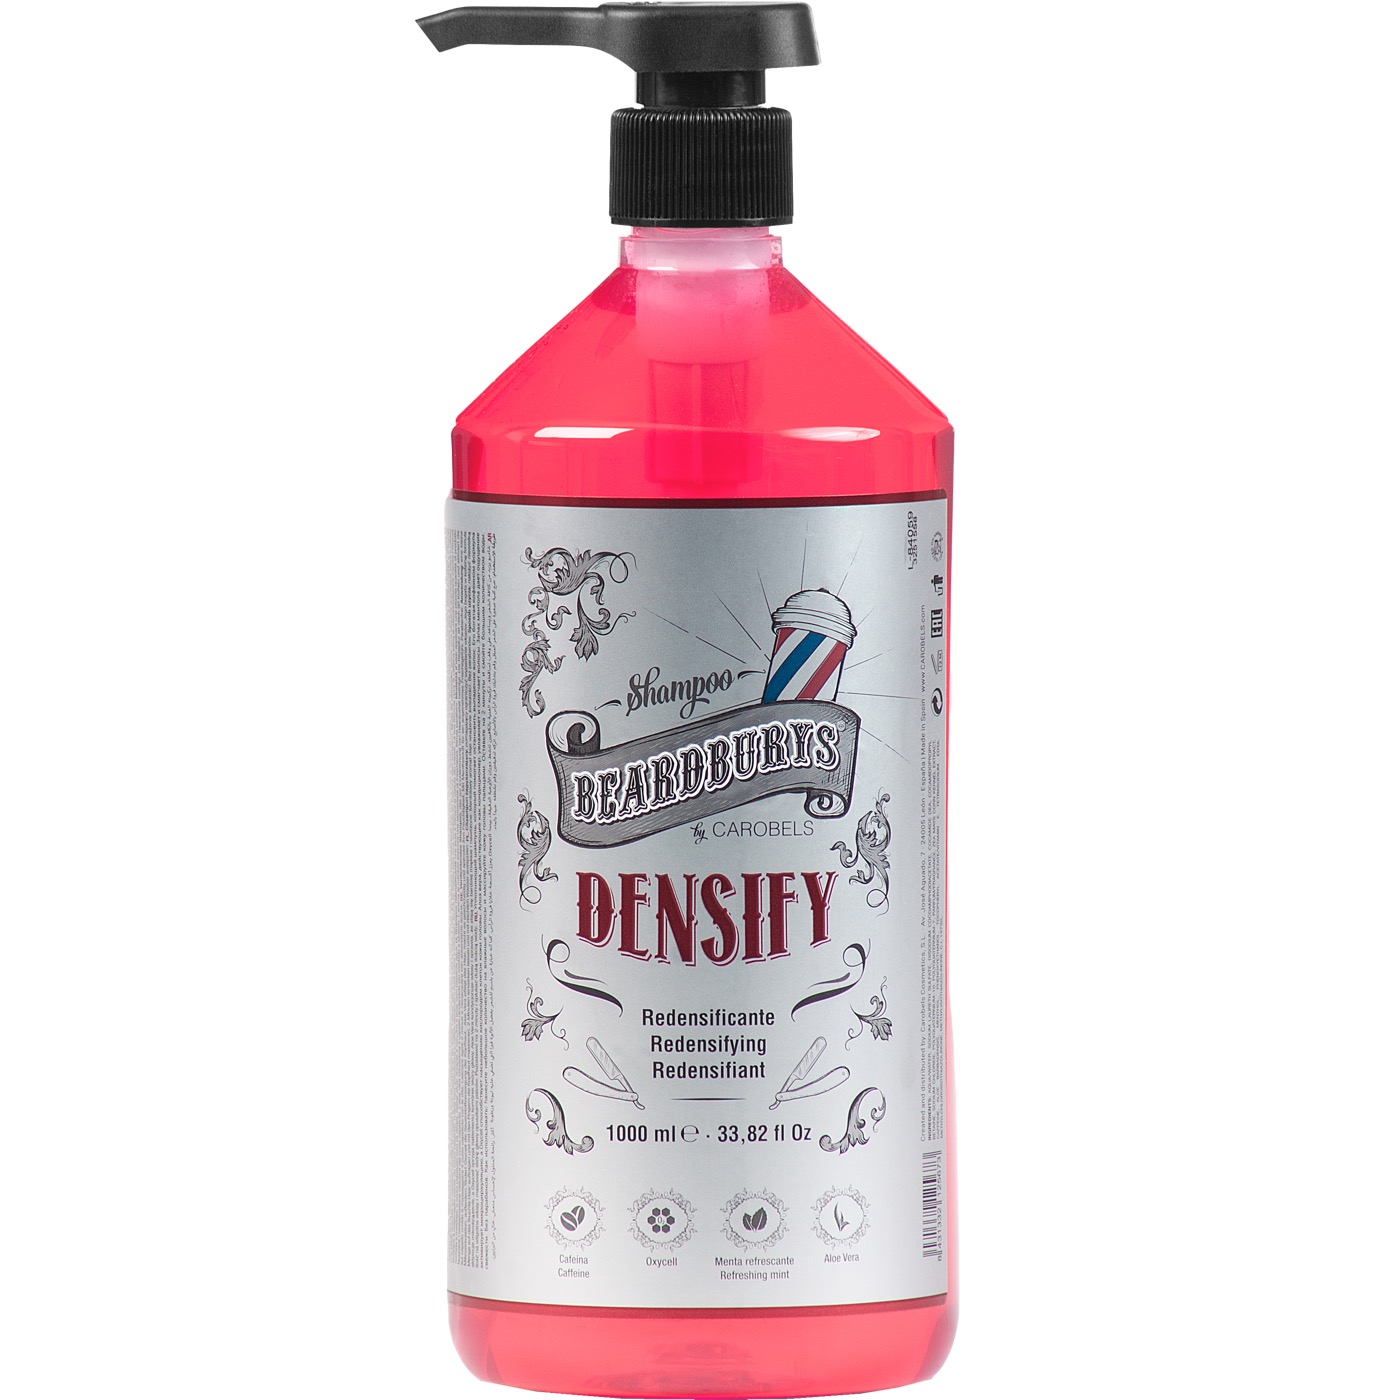 Beardburys Densify Shampoo 1000ml - 1.1 - BB-0412566